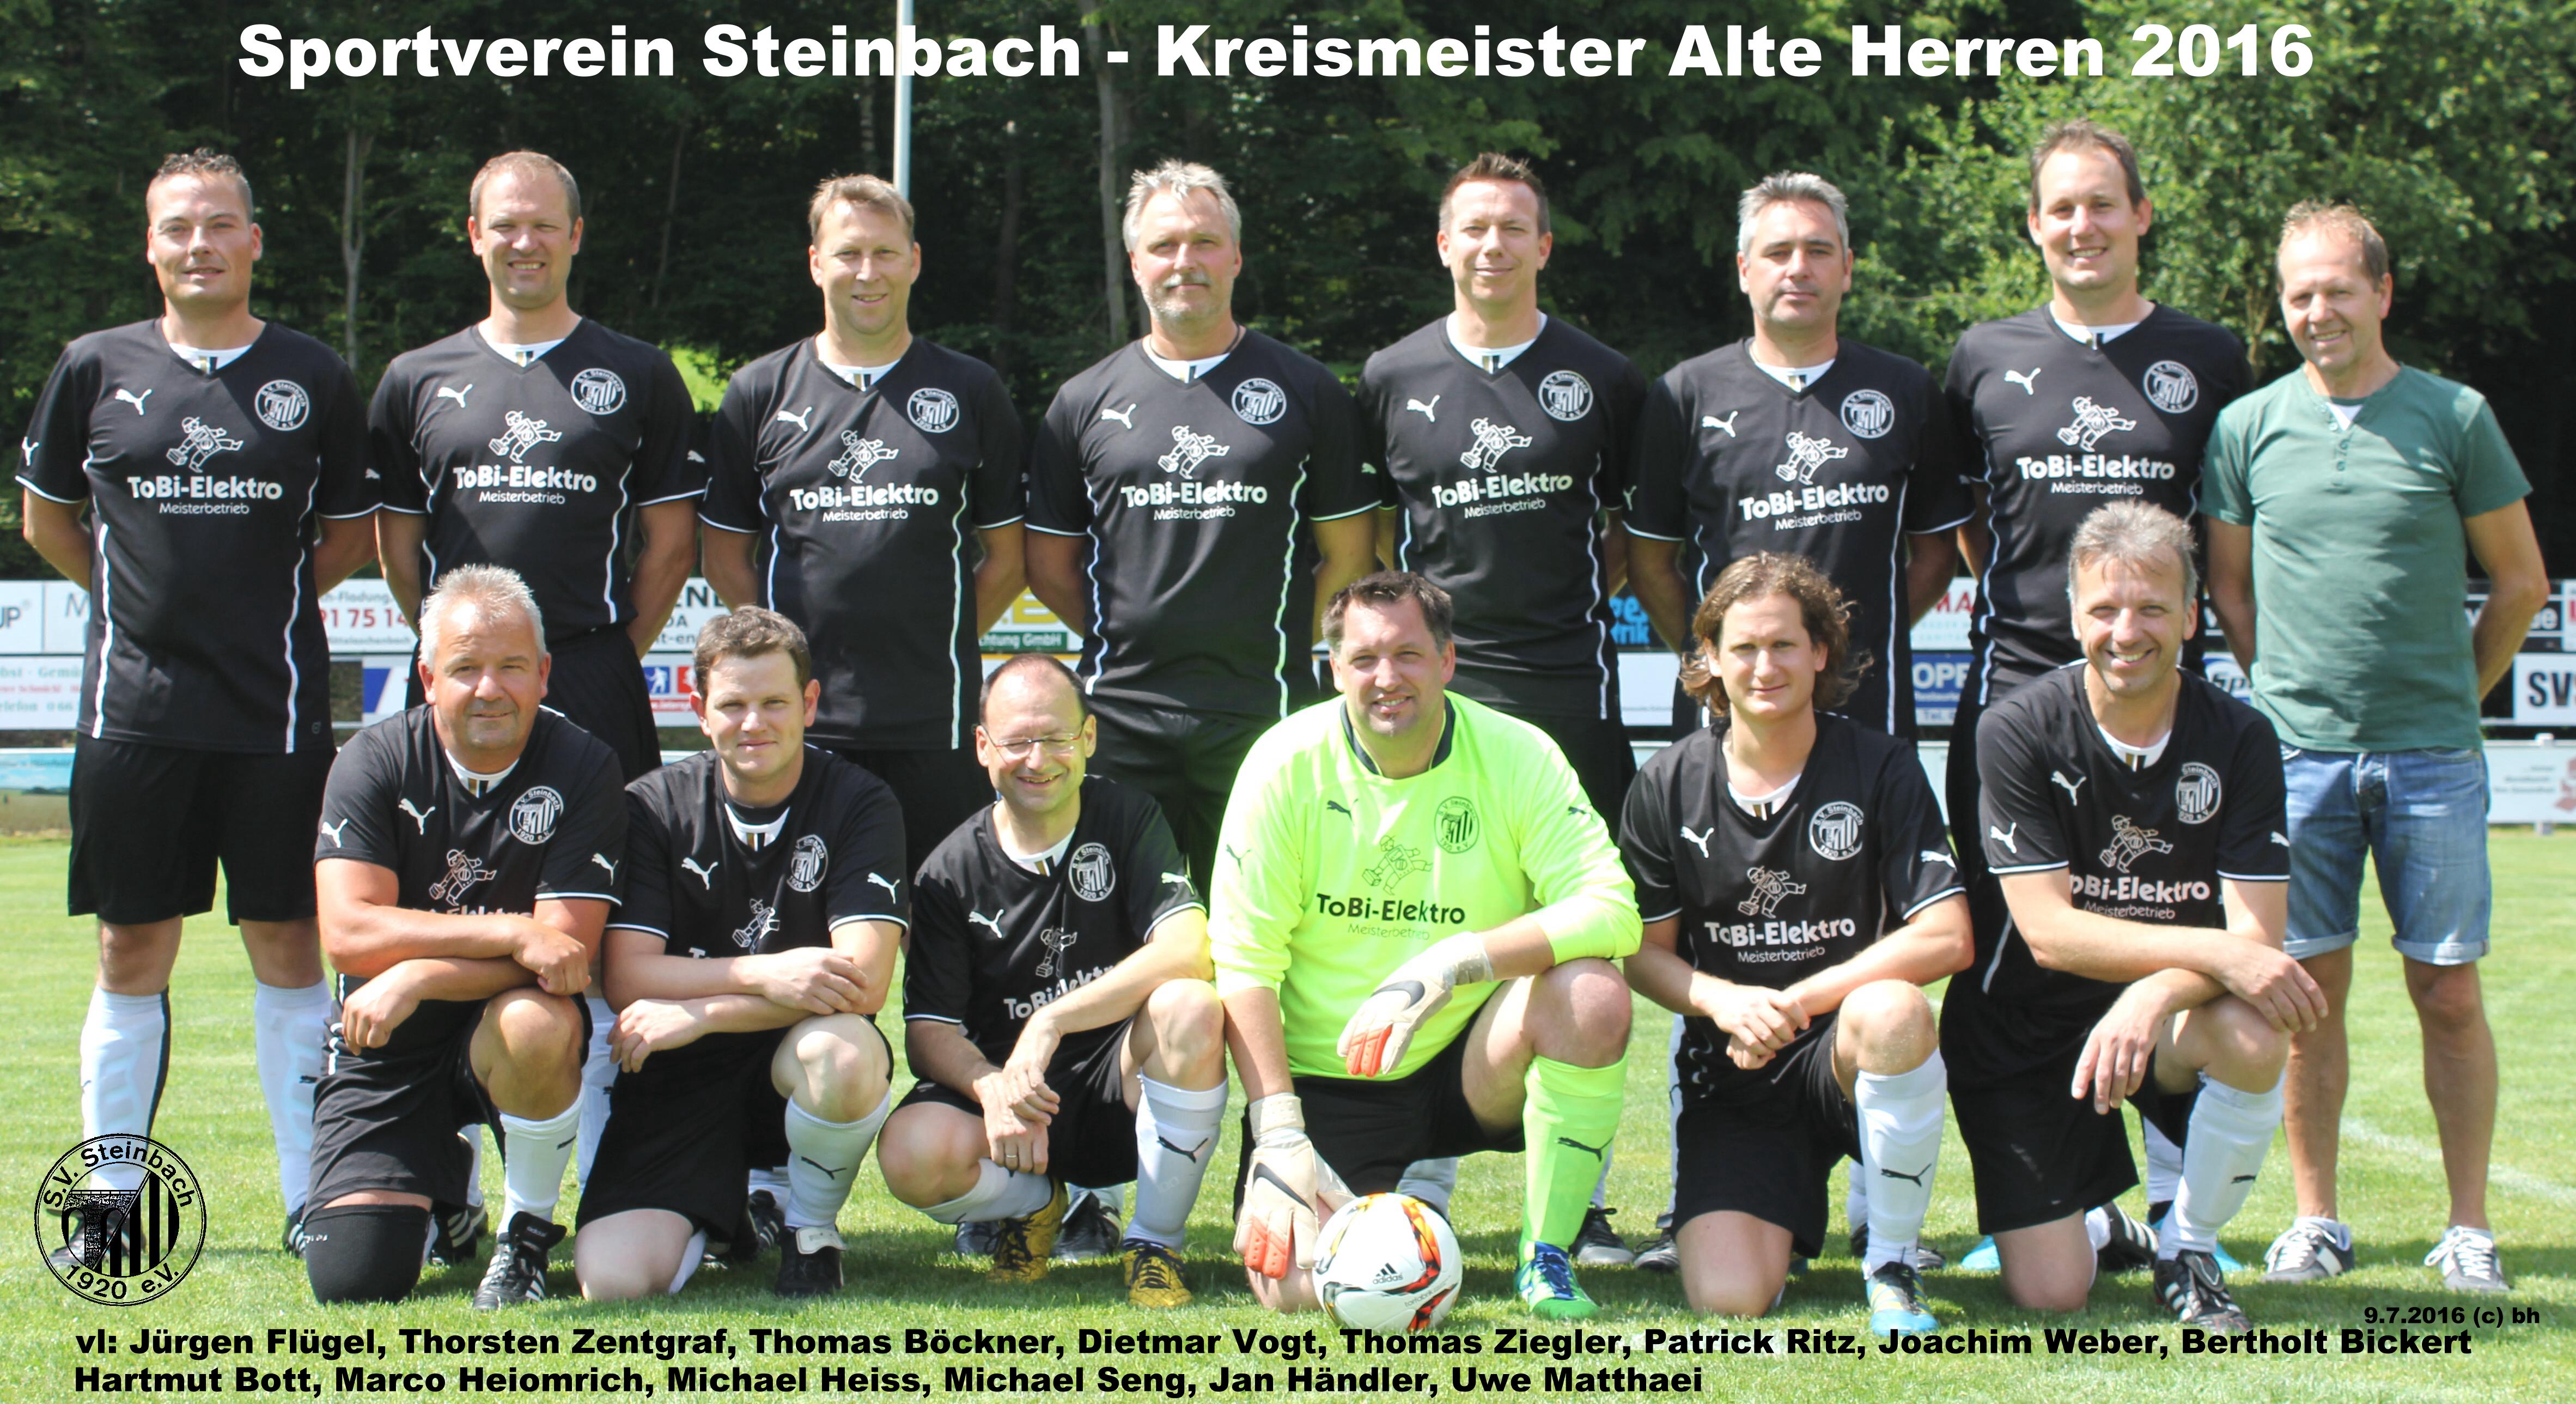 AH-Kreismeister 9.7.2016